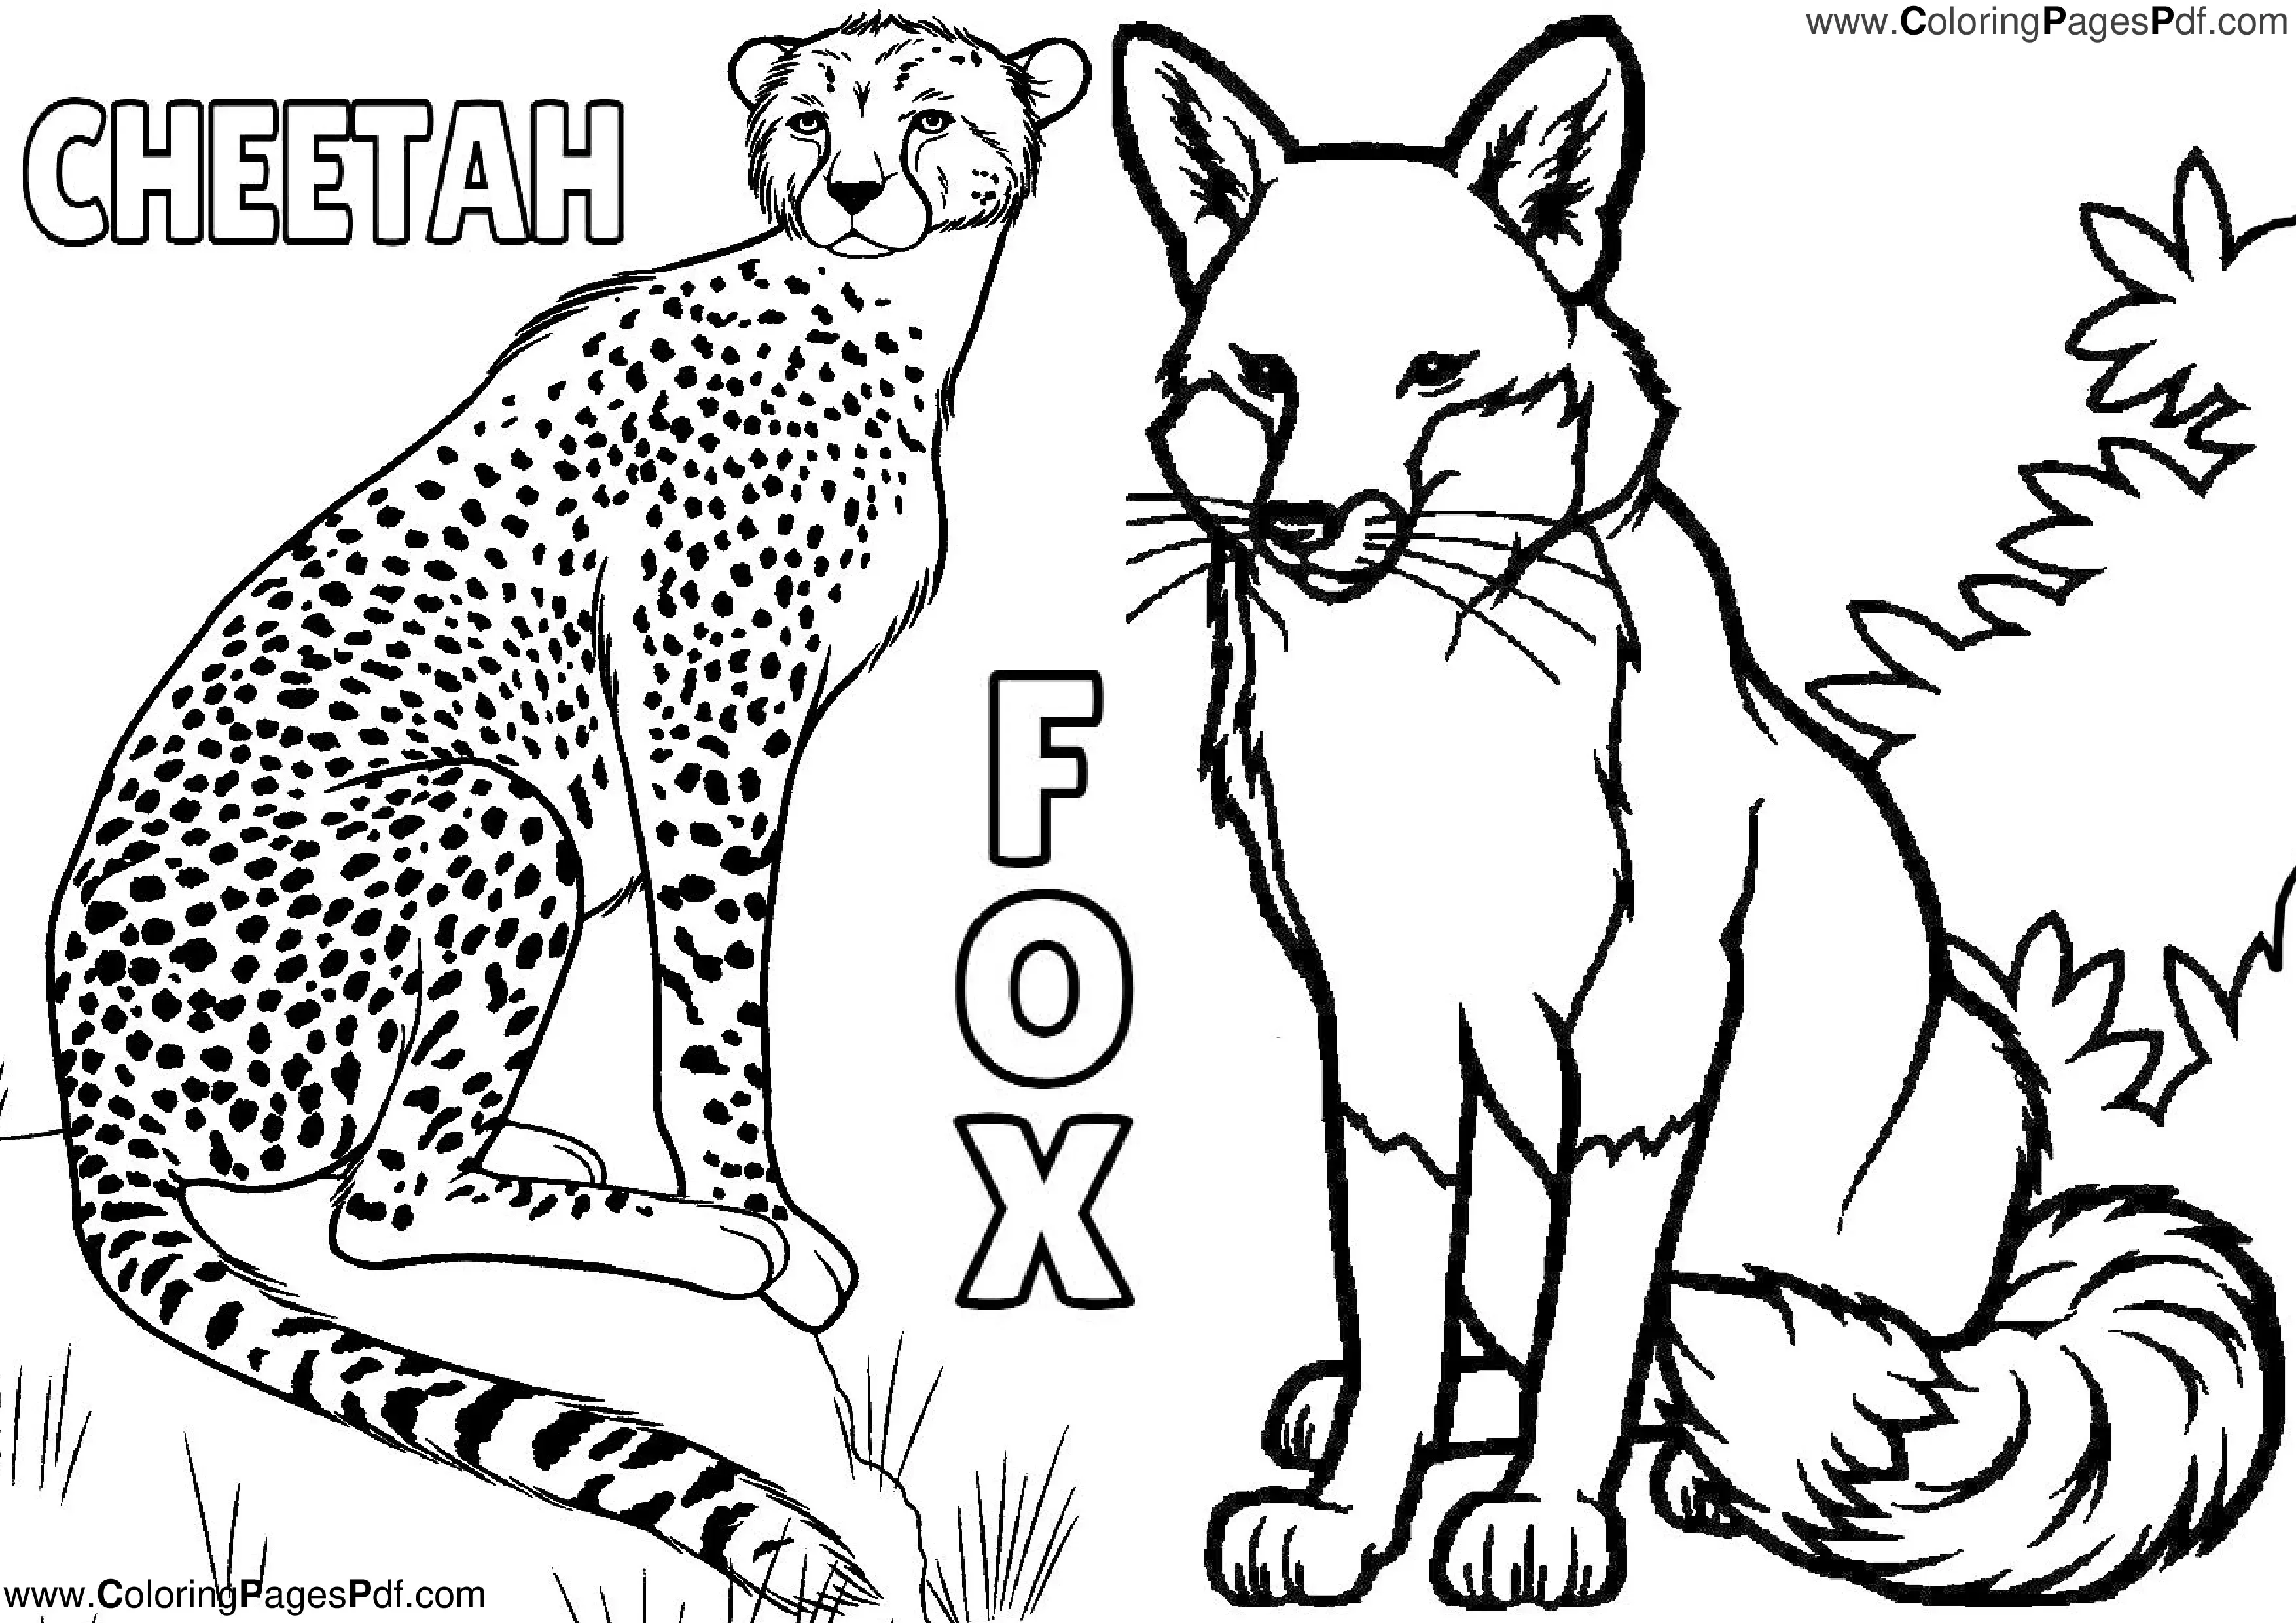 Cheetah & fox coloring pages